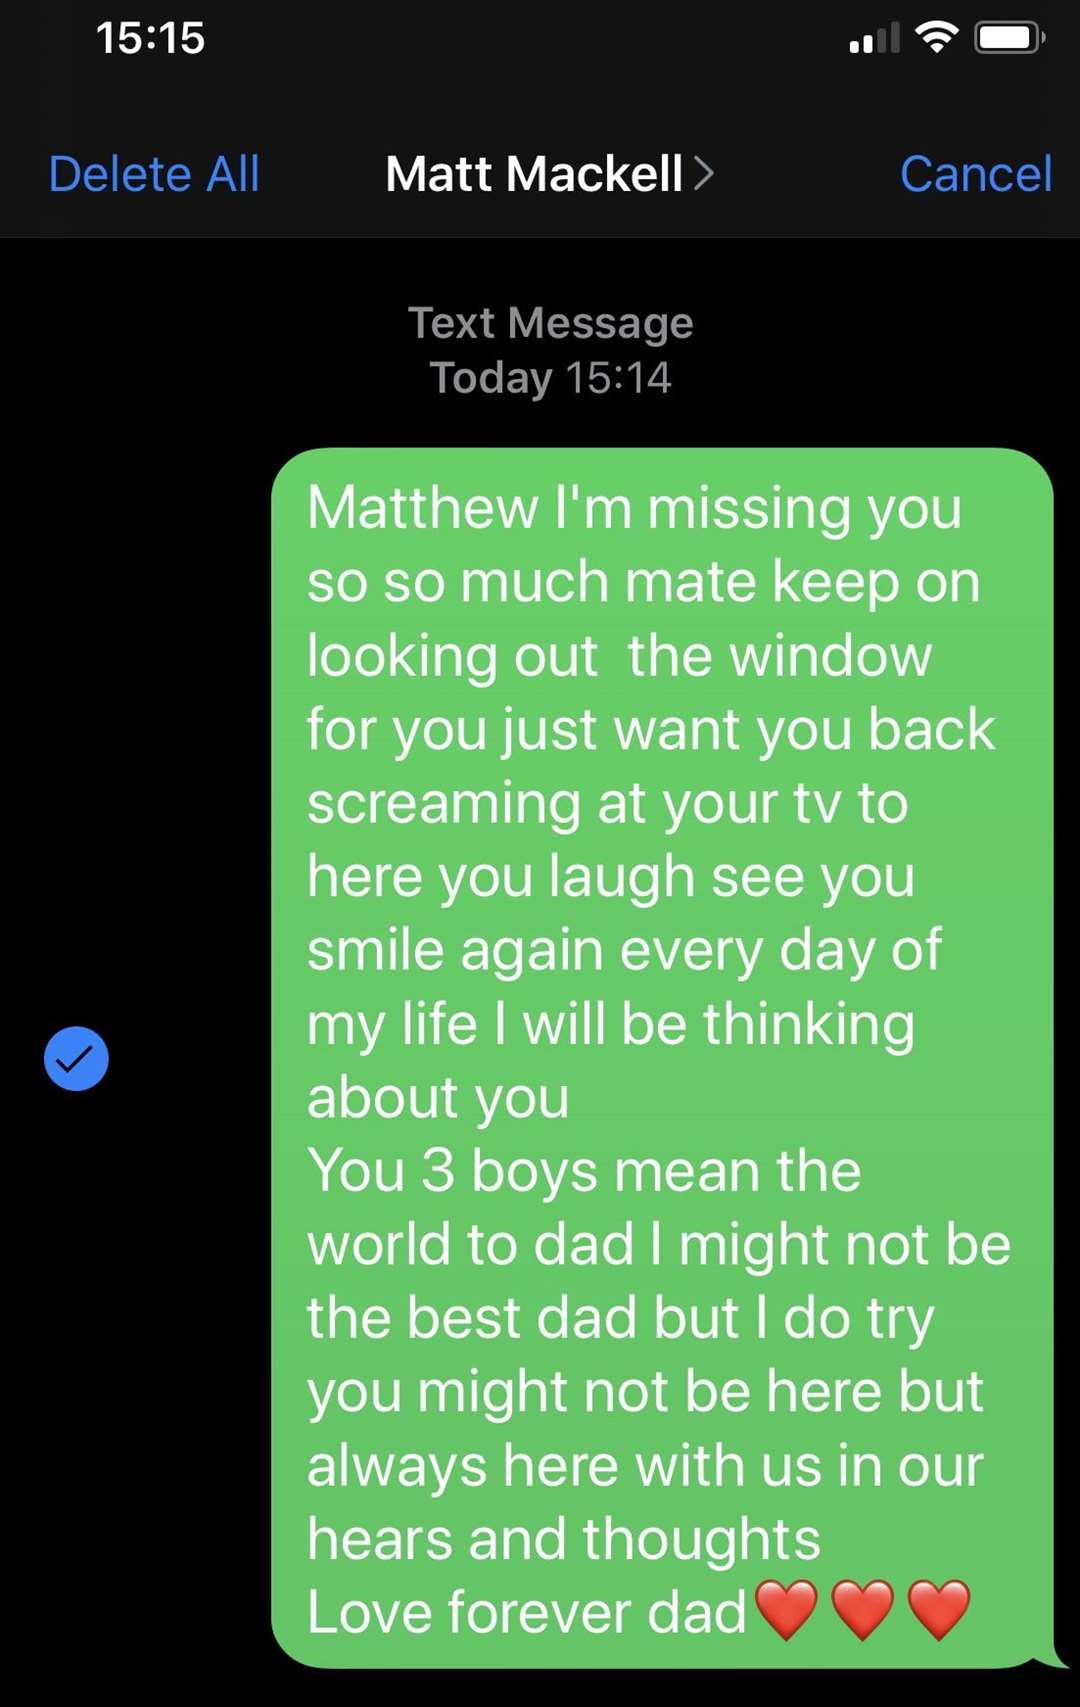 Michael Bond sent this heartfelt text to his son's phone. Picture: Michael Bond